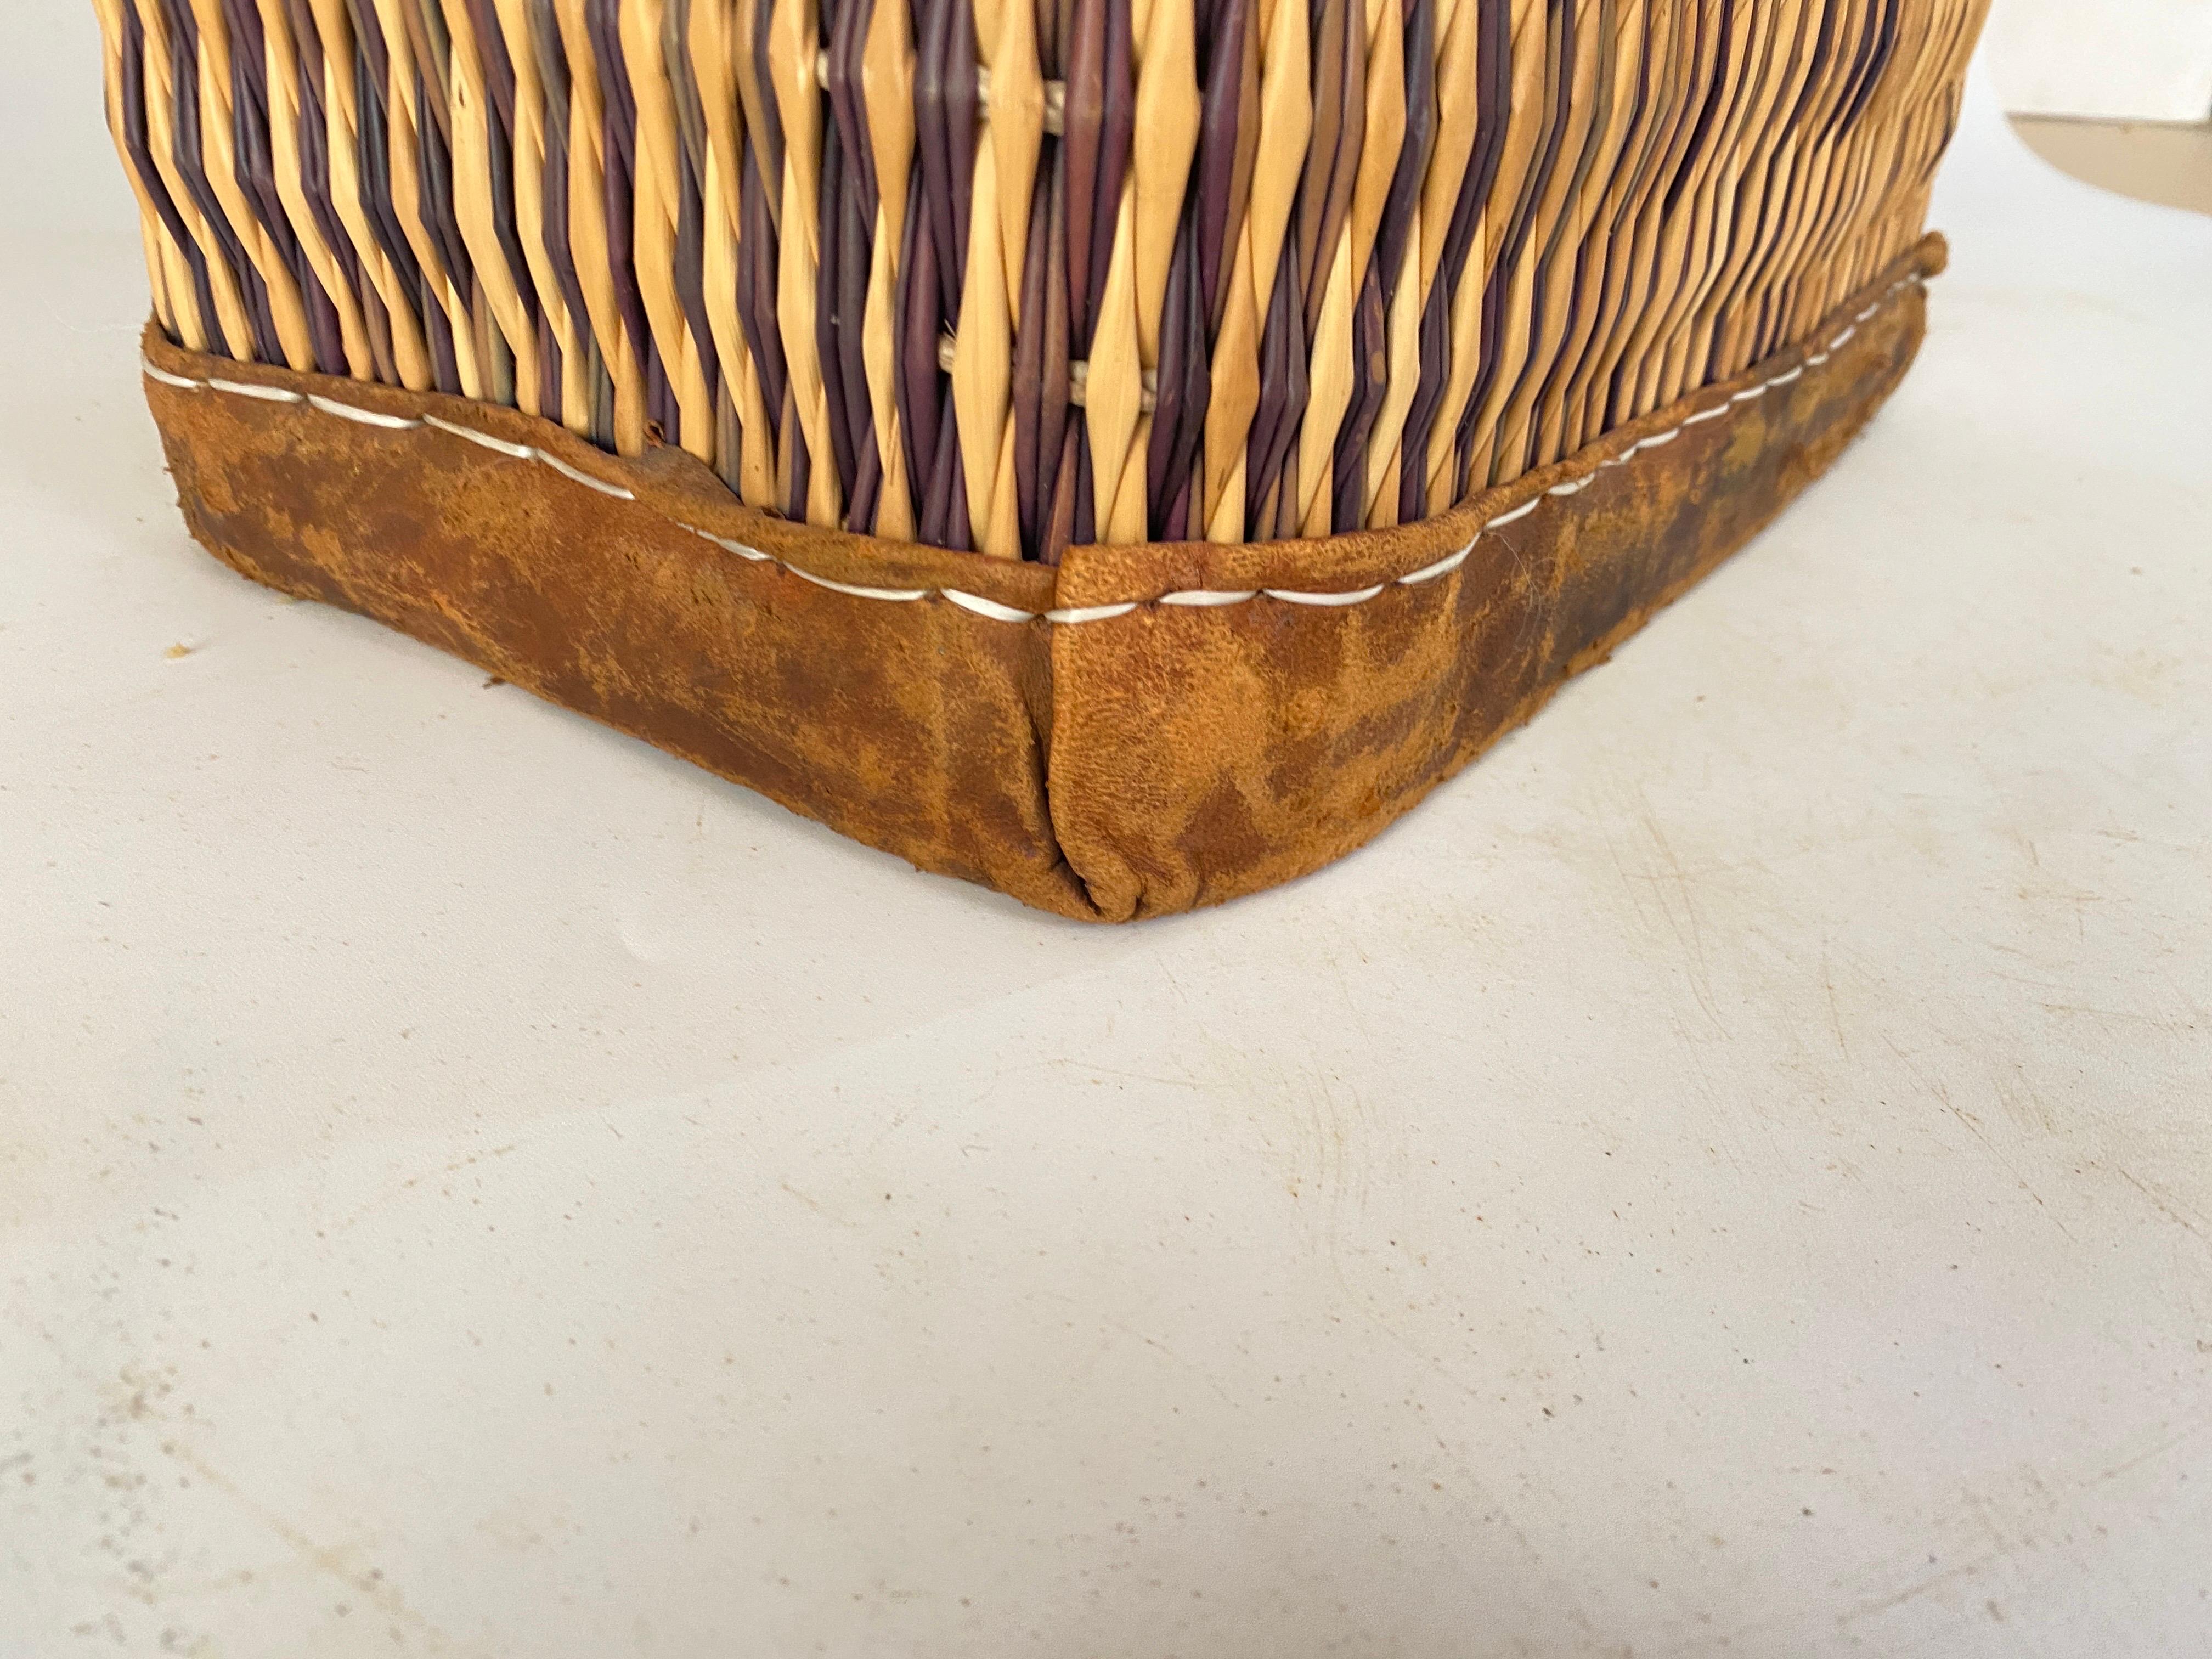 Vintage French Wicker Basket, Gold Color Stitched Leather Bag Handles France For Sale 8